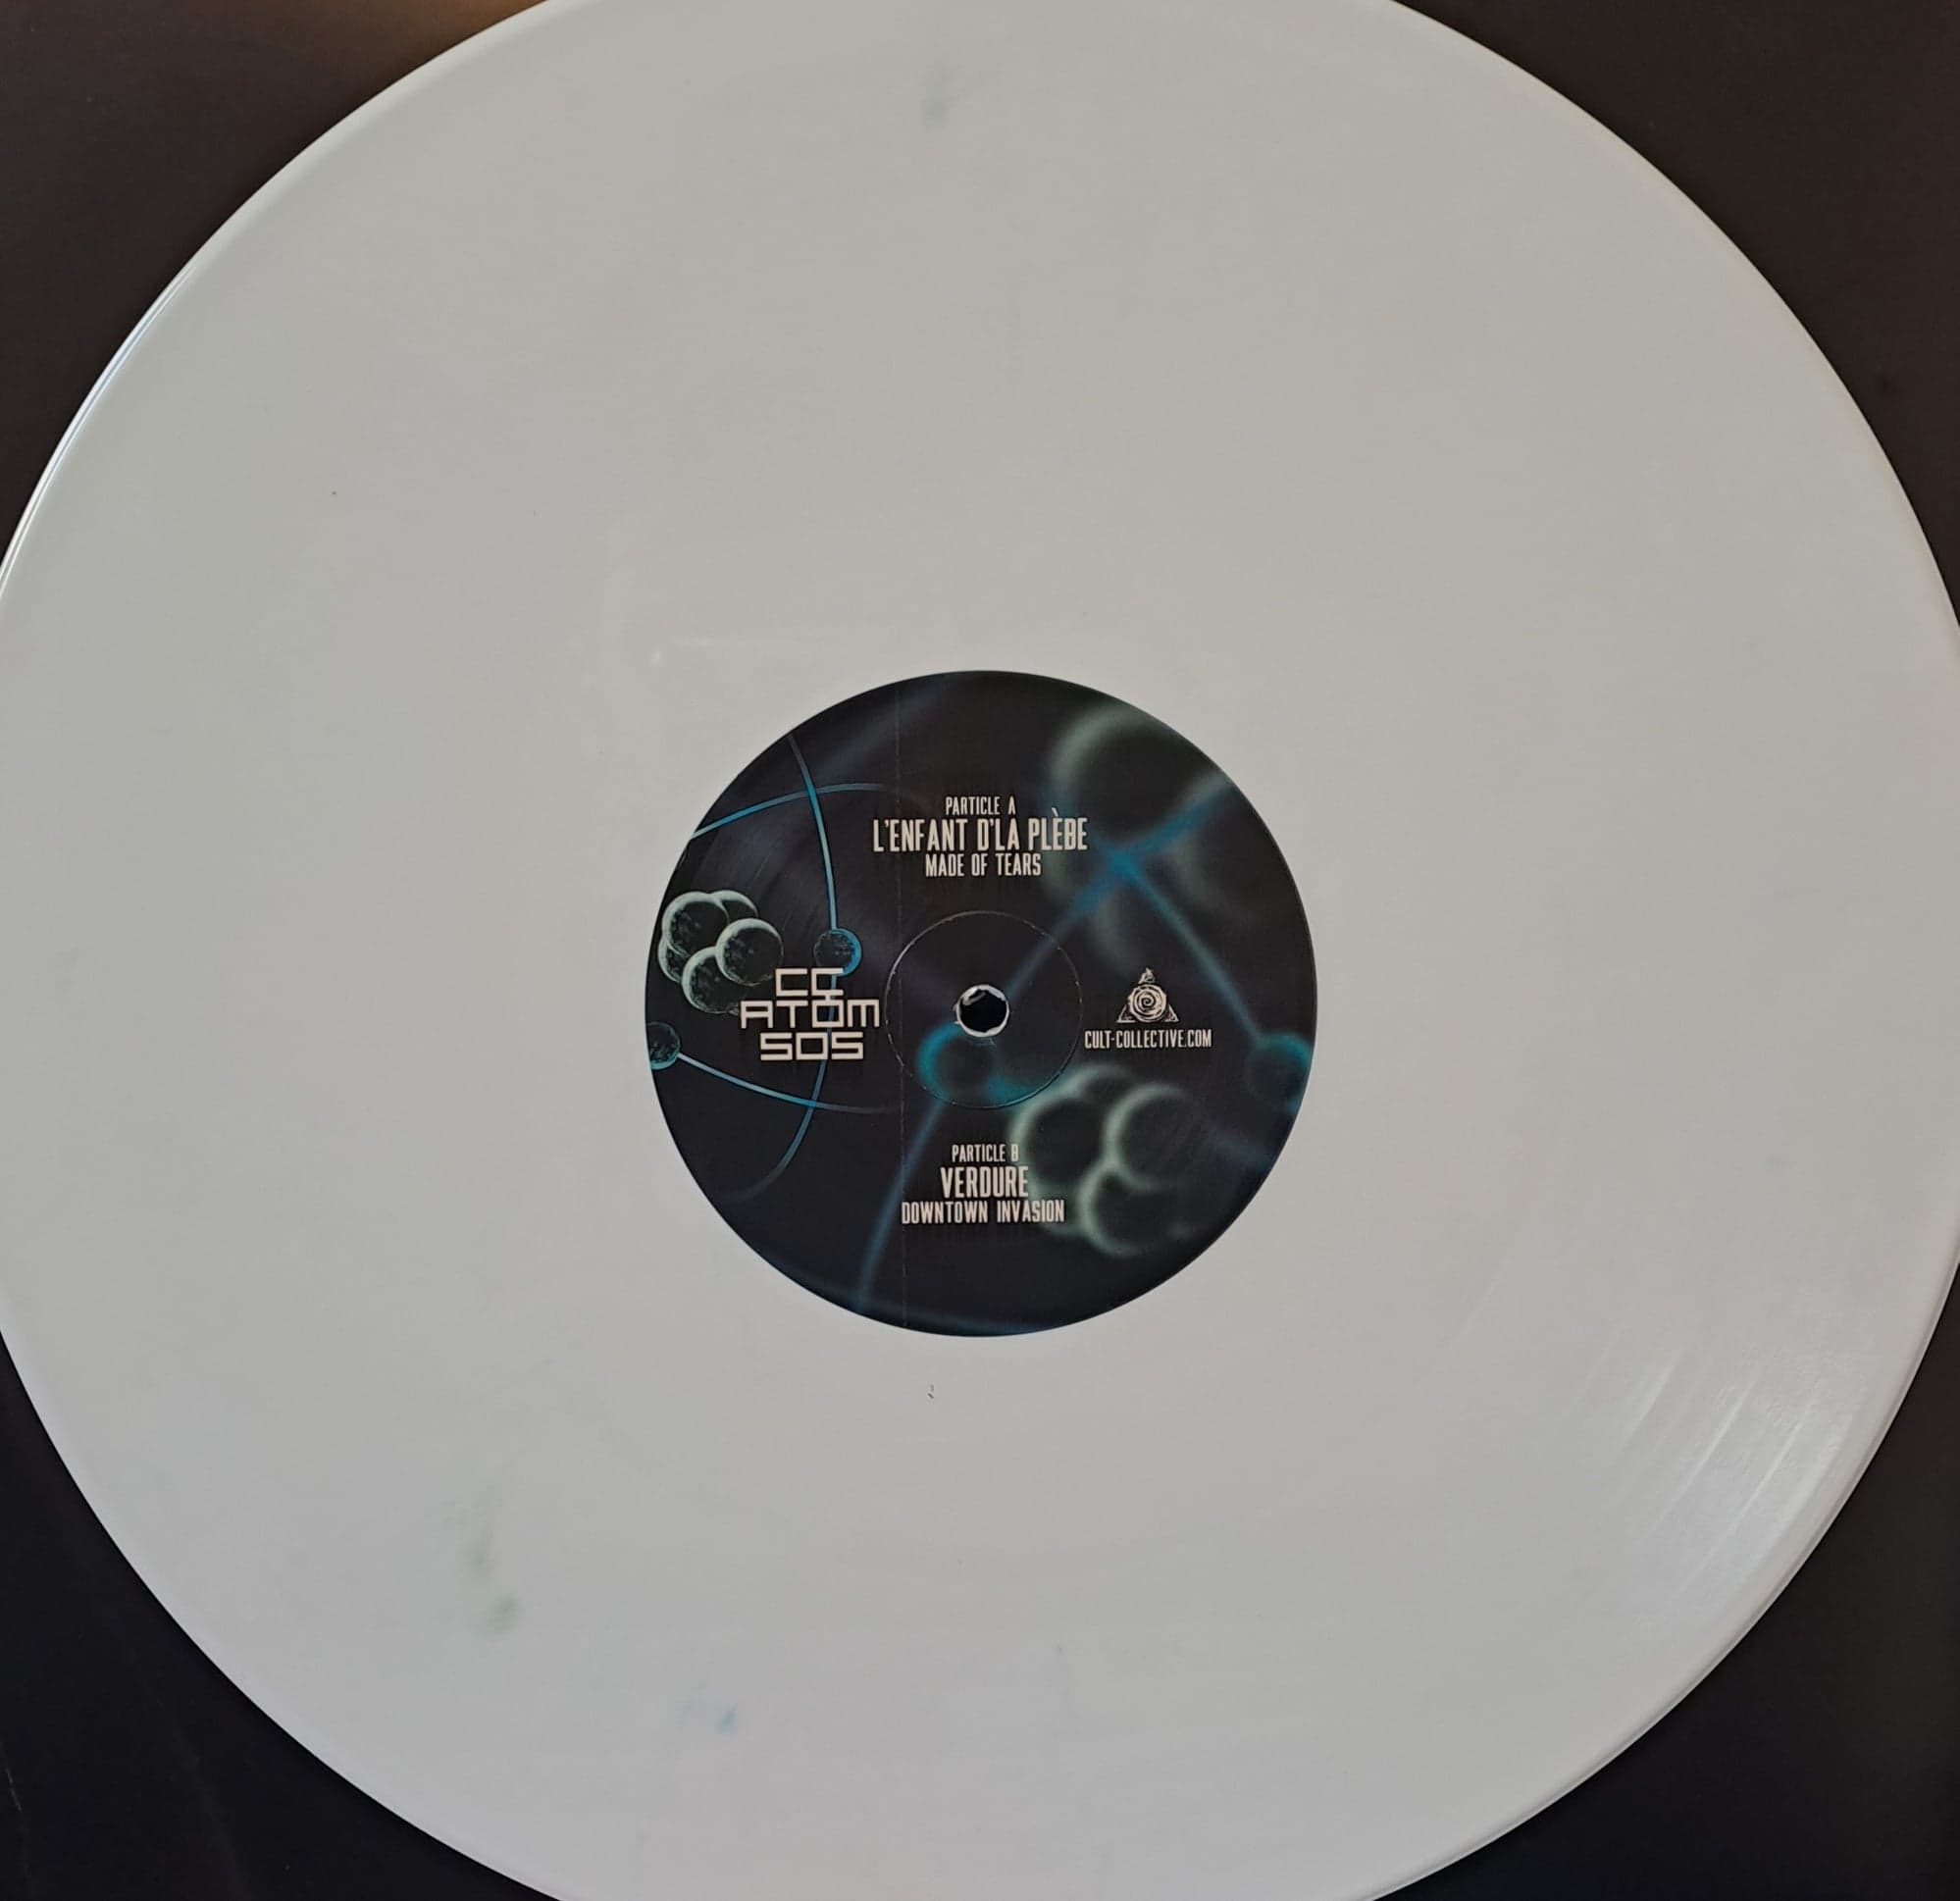 CC Atom 505 - vinyle Hard Trance